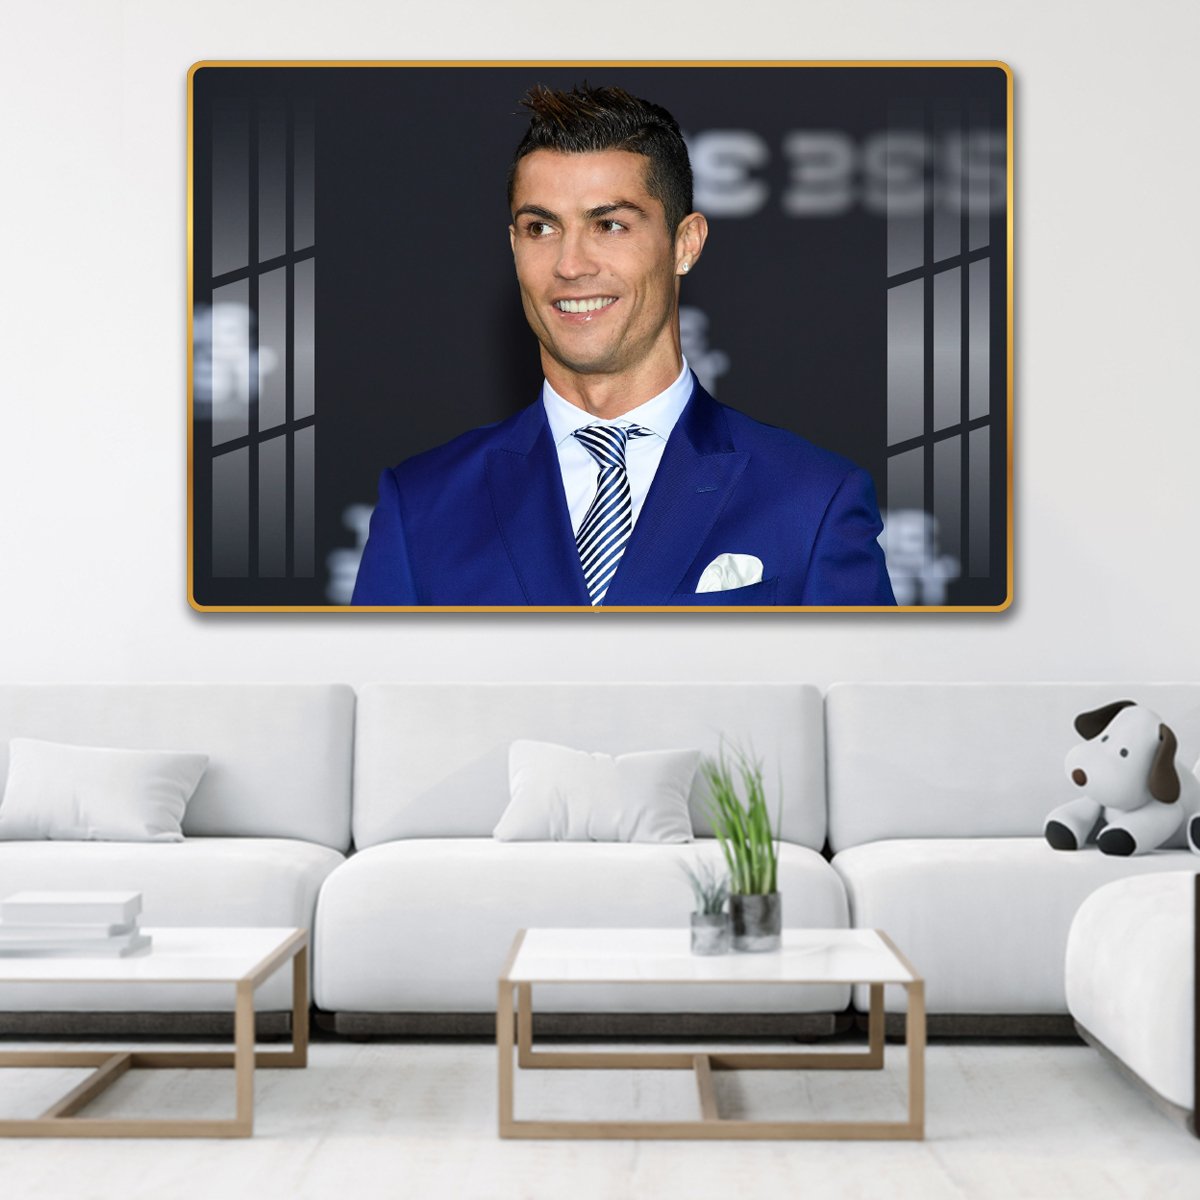 Tranh treo tường cầu thủ Cristiano Ronaldo 11